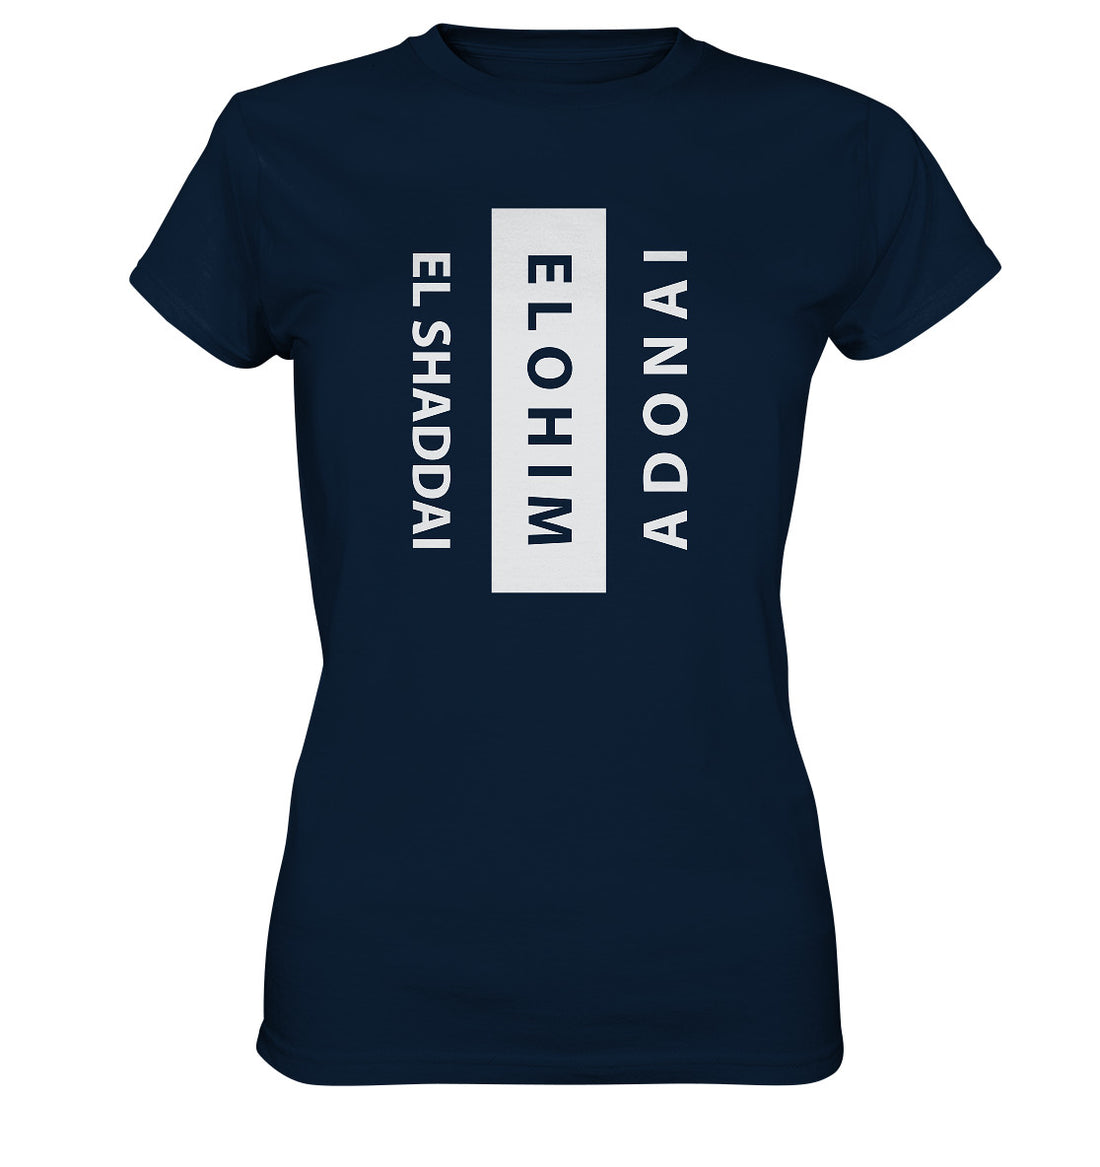 El Shaddai, Elohim, Adonai - Ladies Premium Shirt